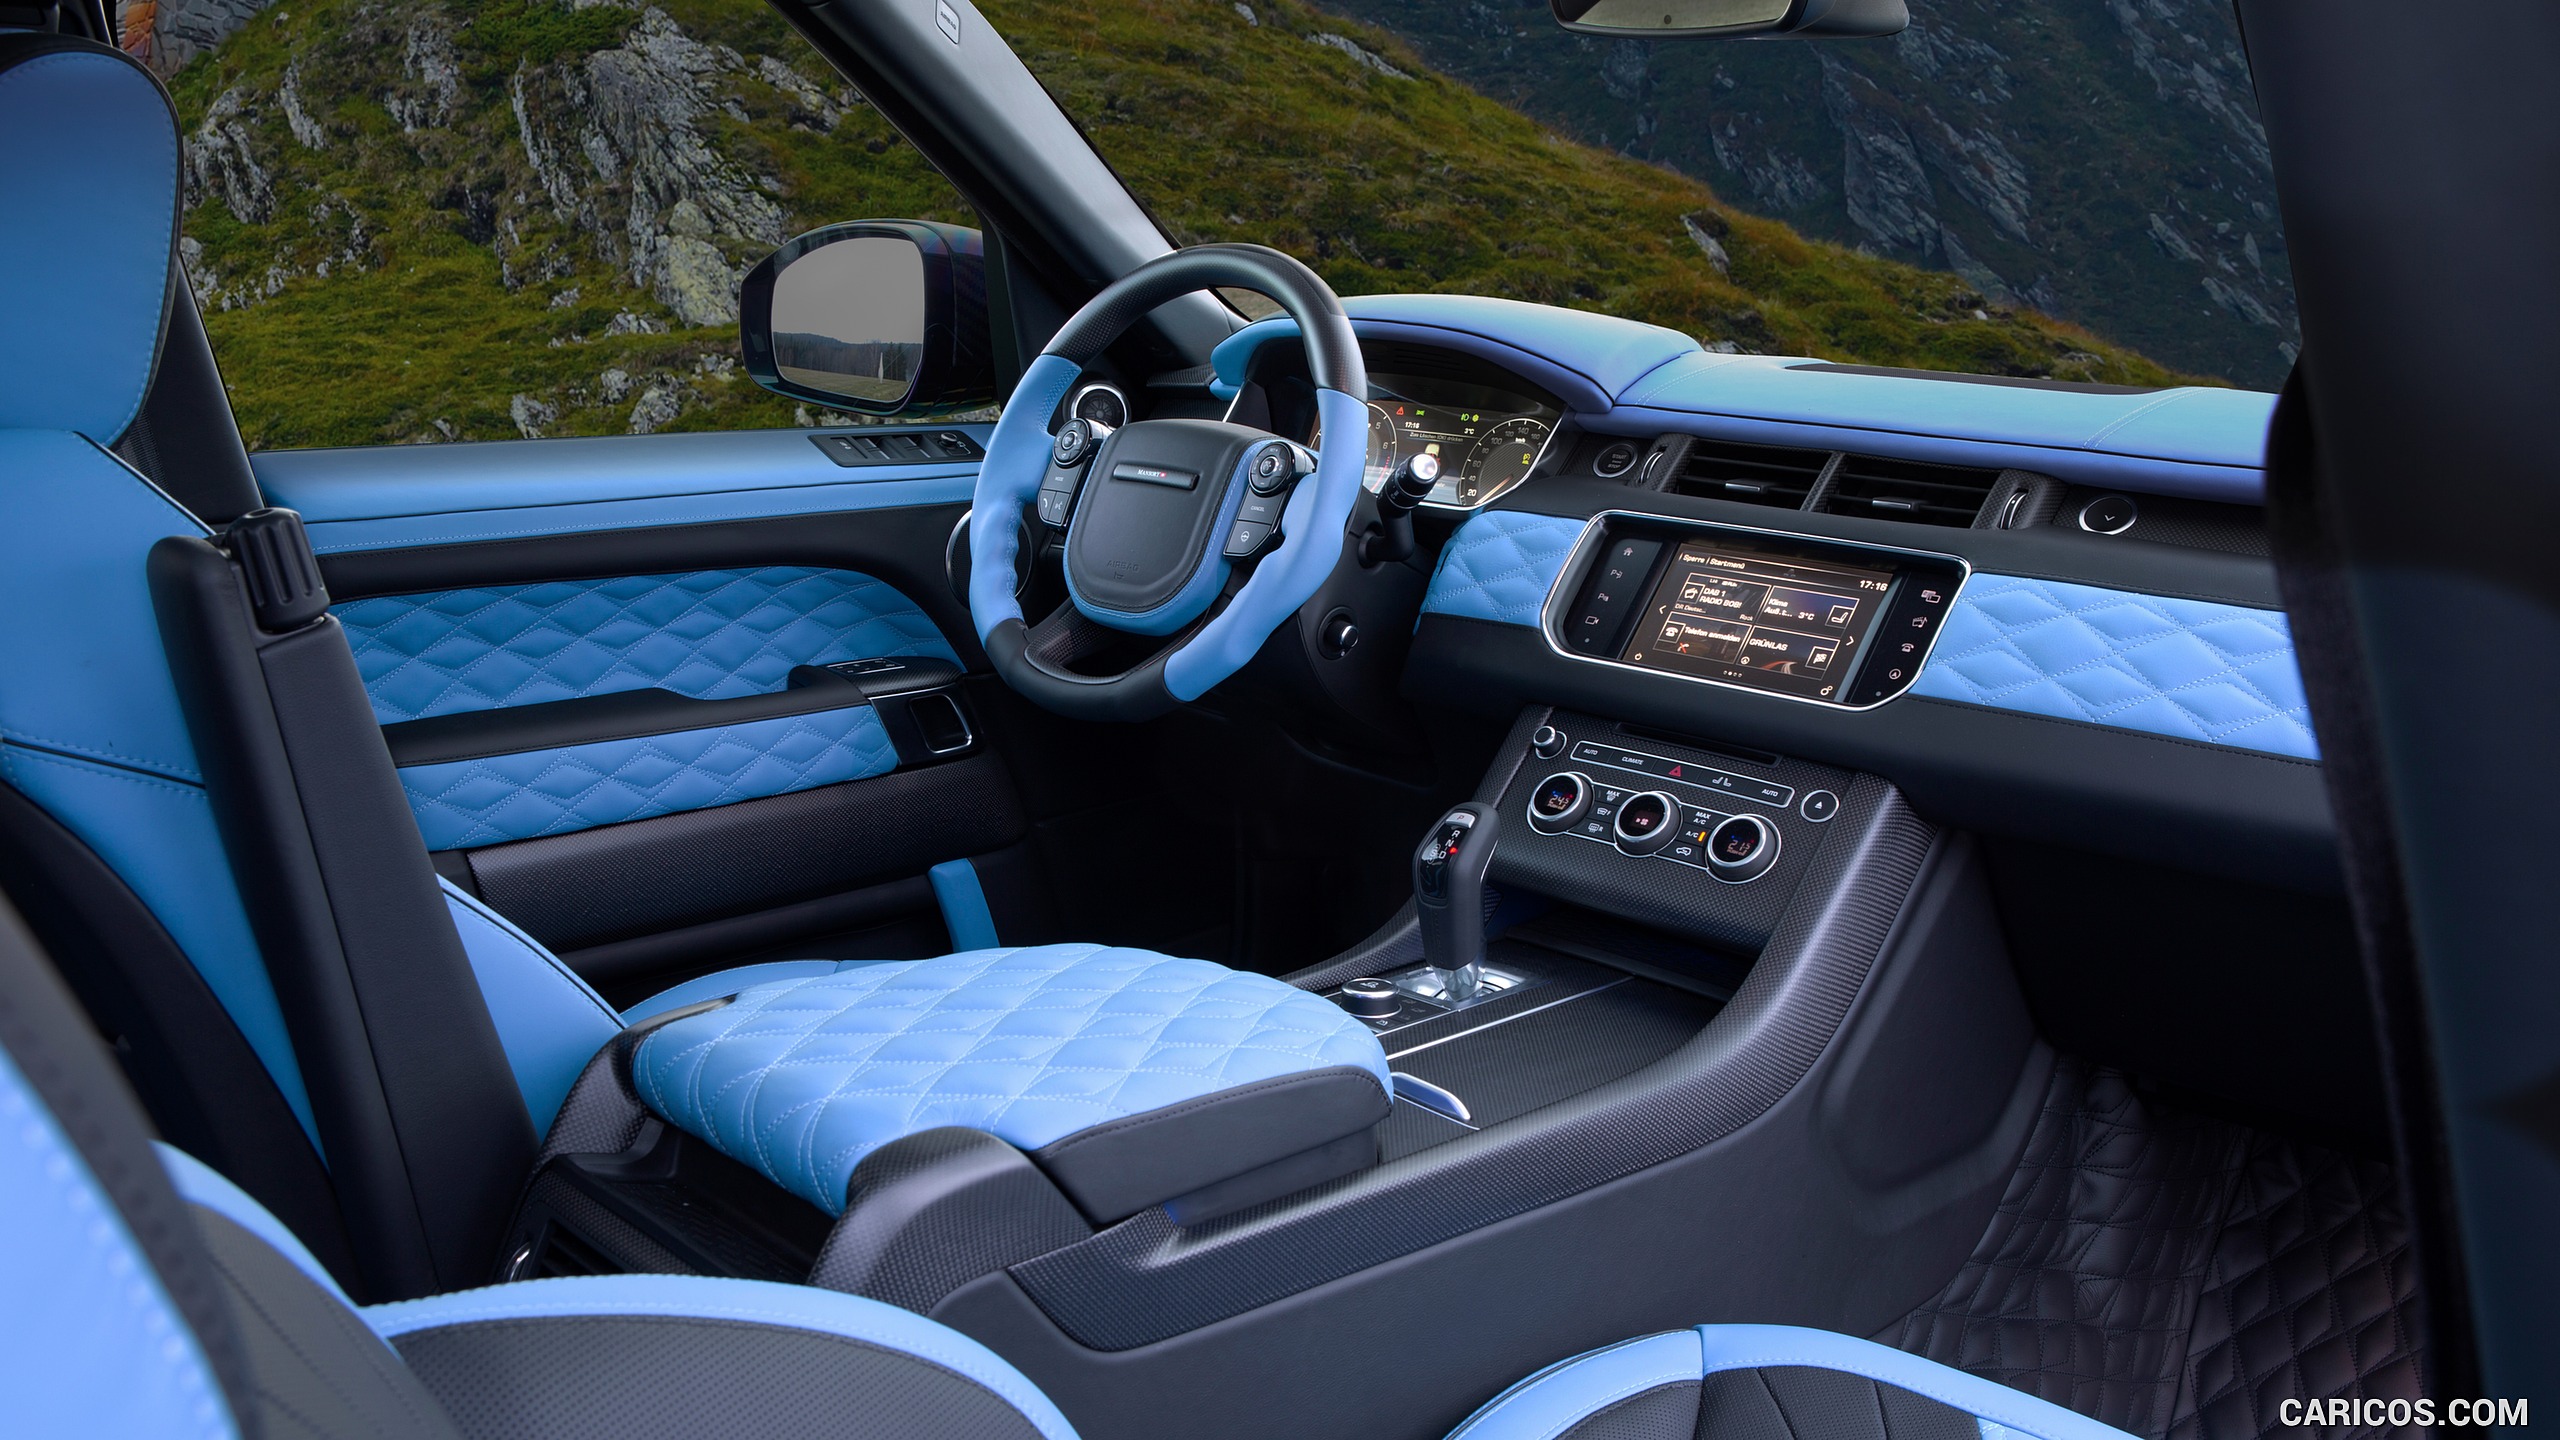 2016 MANSORY Range Rover Sport - Interior, #5 of 7